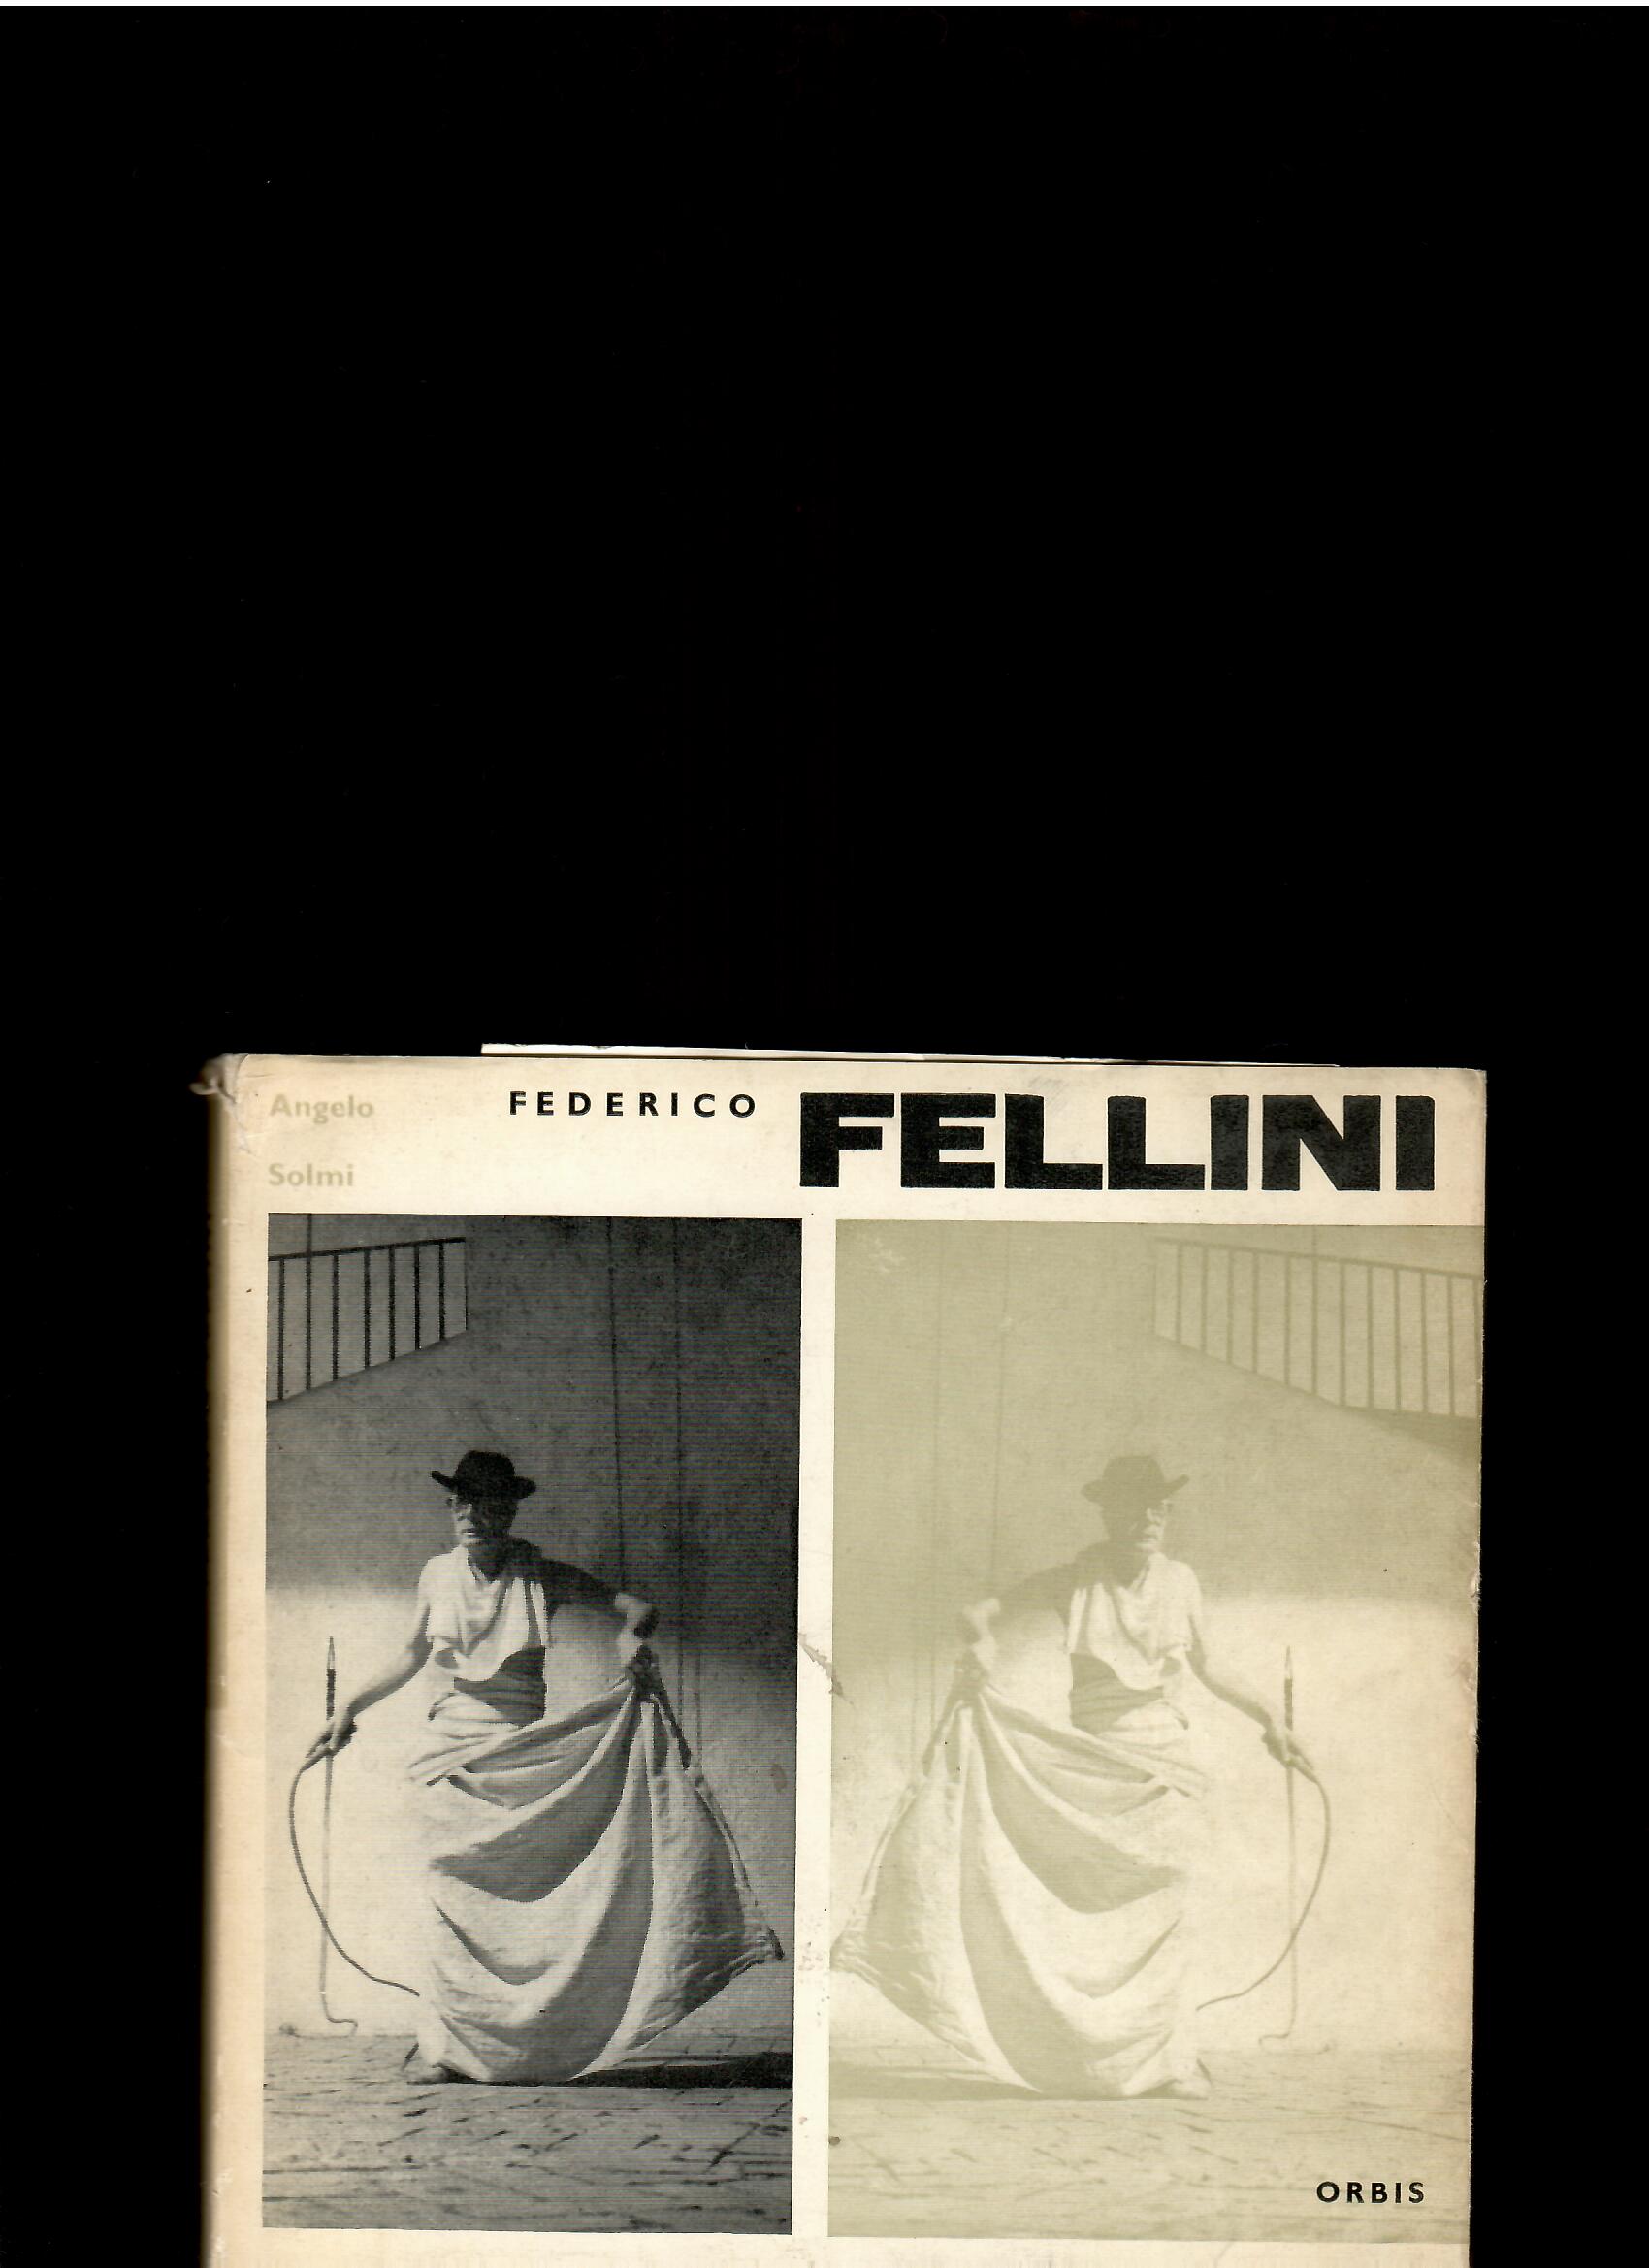 Angelo Solmi: Federico Fellini